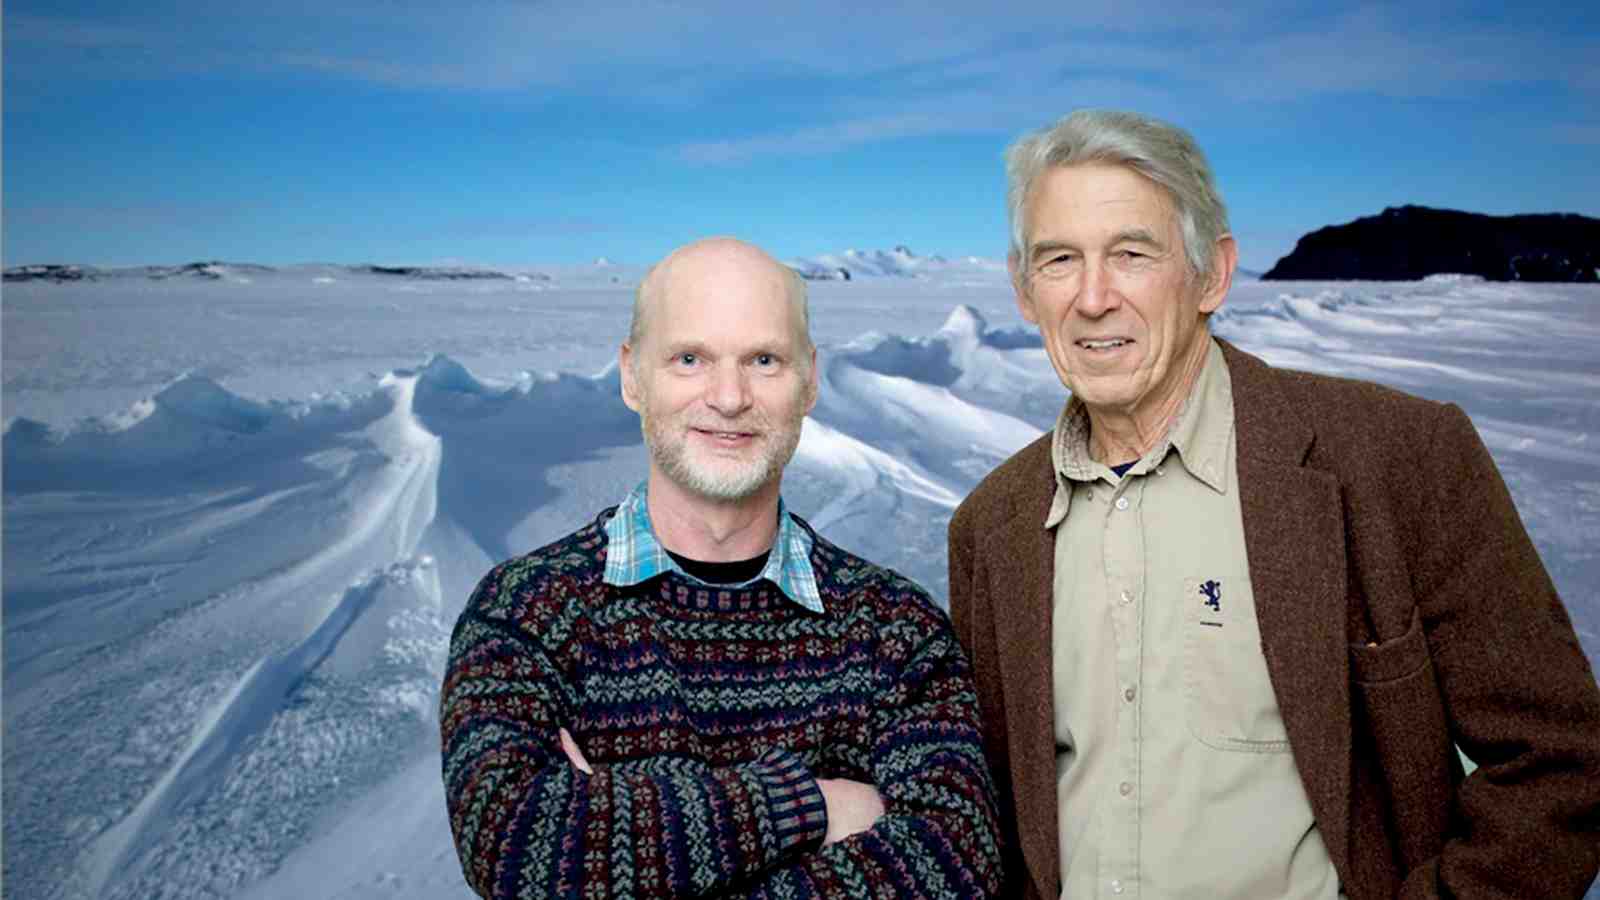 From left associate professor Simon Lamb and Emeritus Professor Peter Barrett of the Antarctic Research Centre.